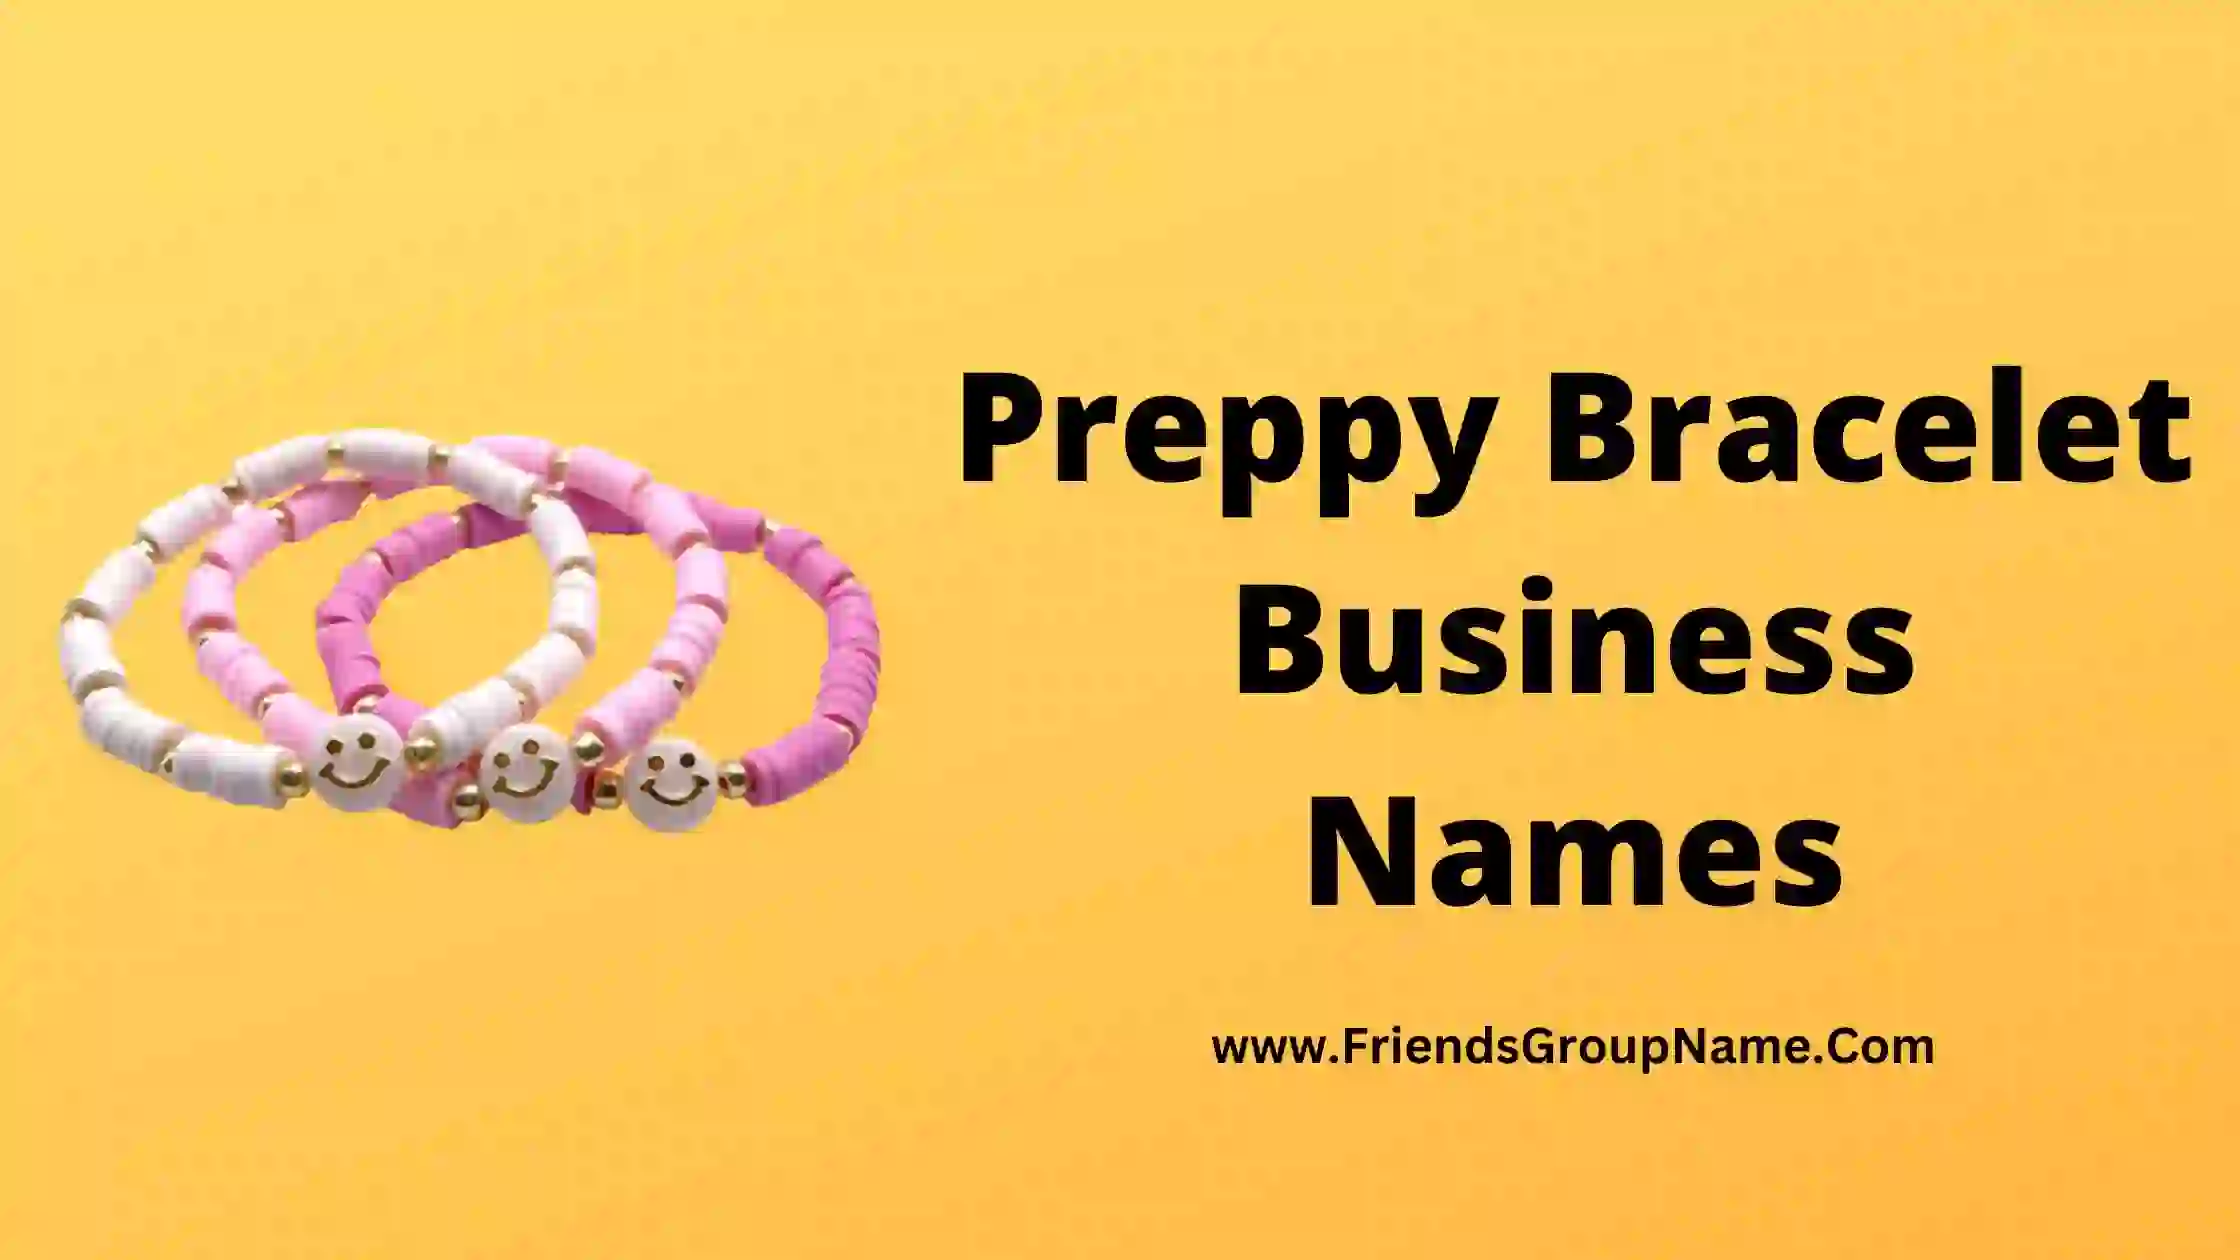 Preppy Bracelet Business Names